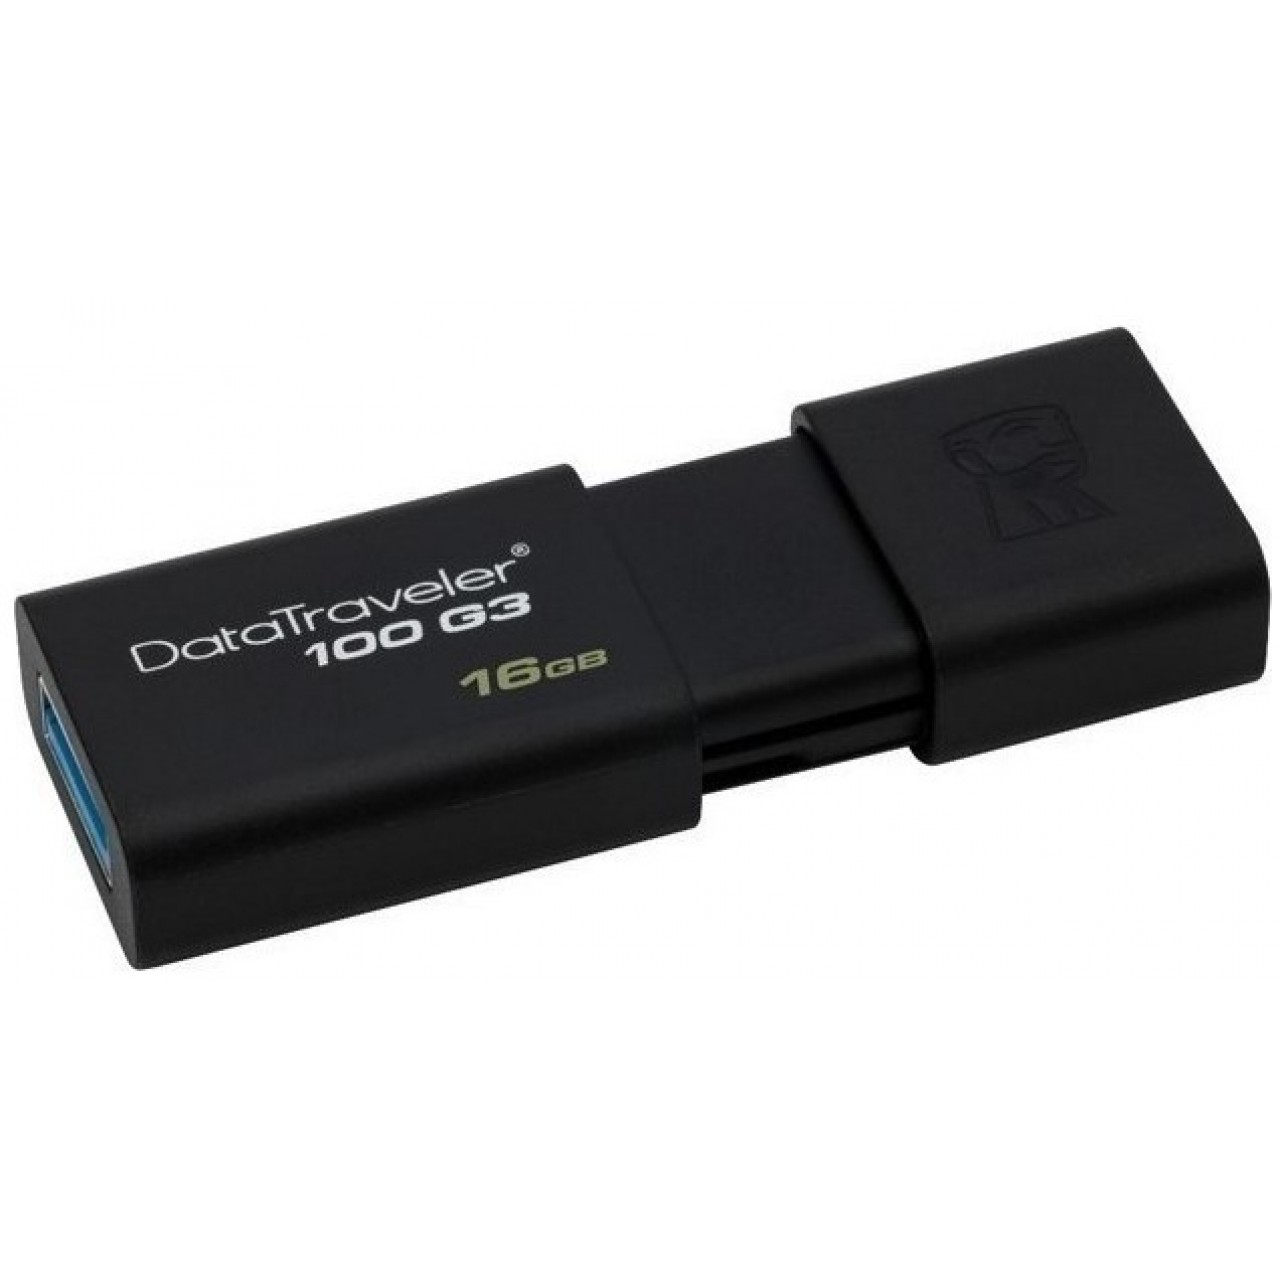 USB Stick Kingston DataTraveler 100 G3 16GB - 3435 - Μαύρο